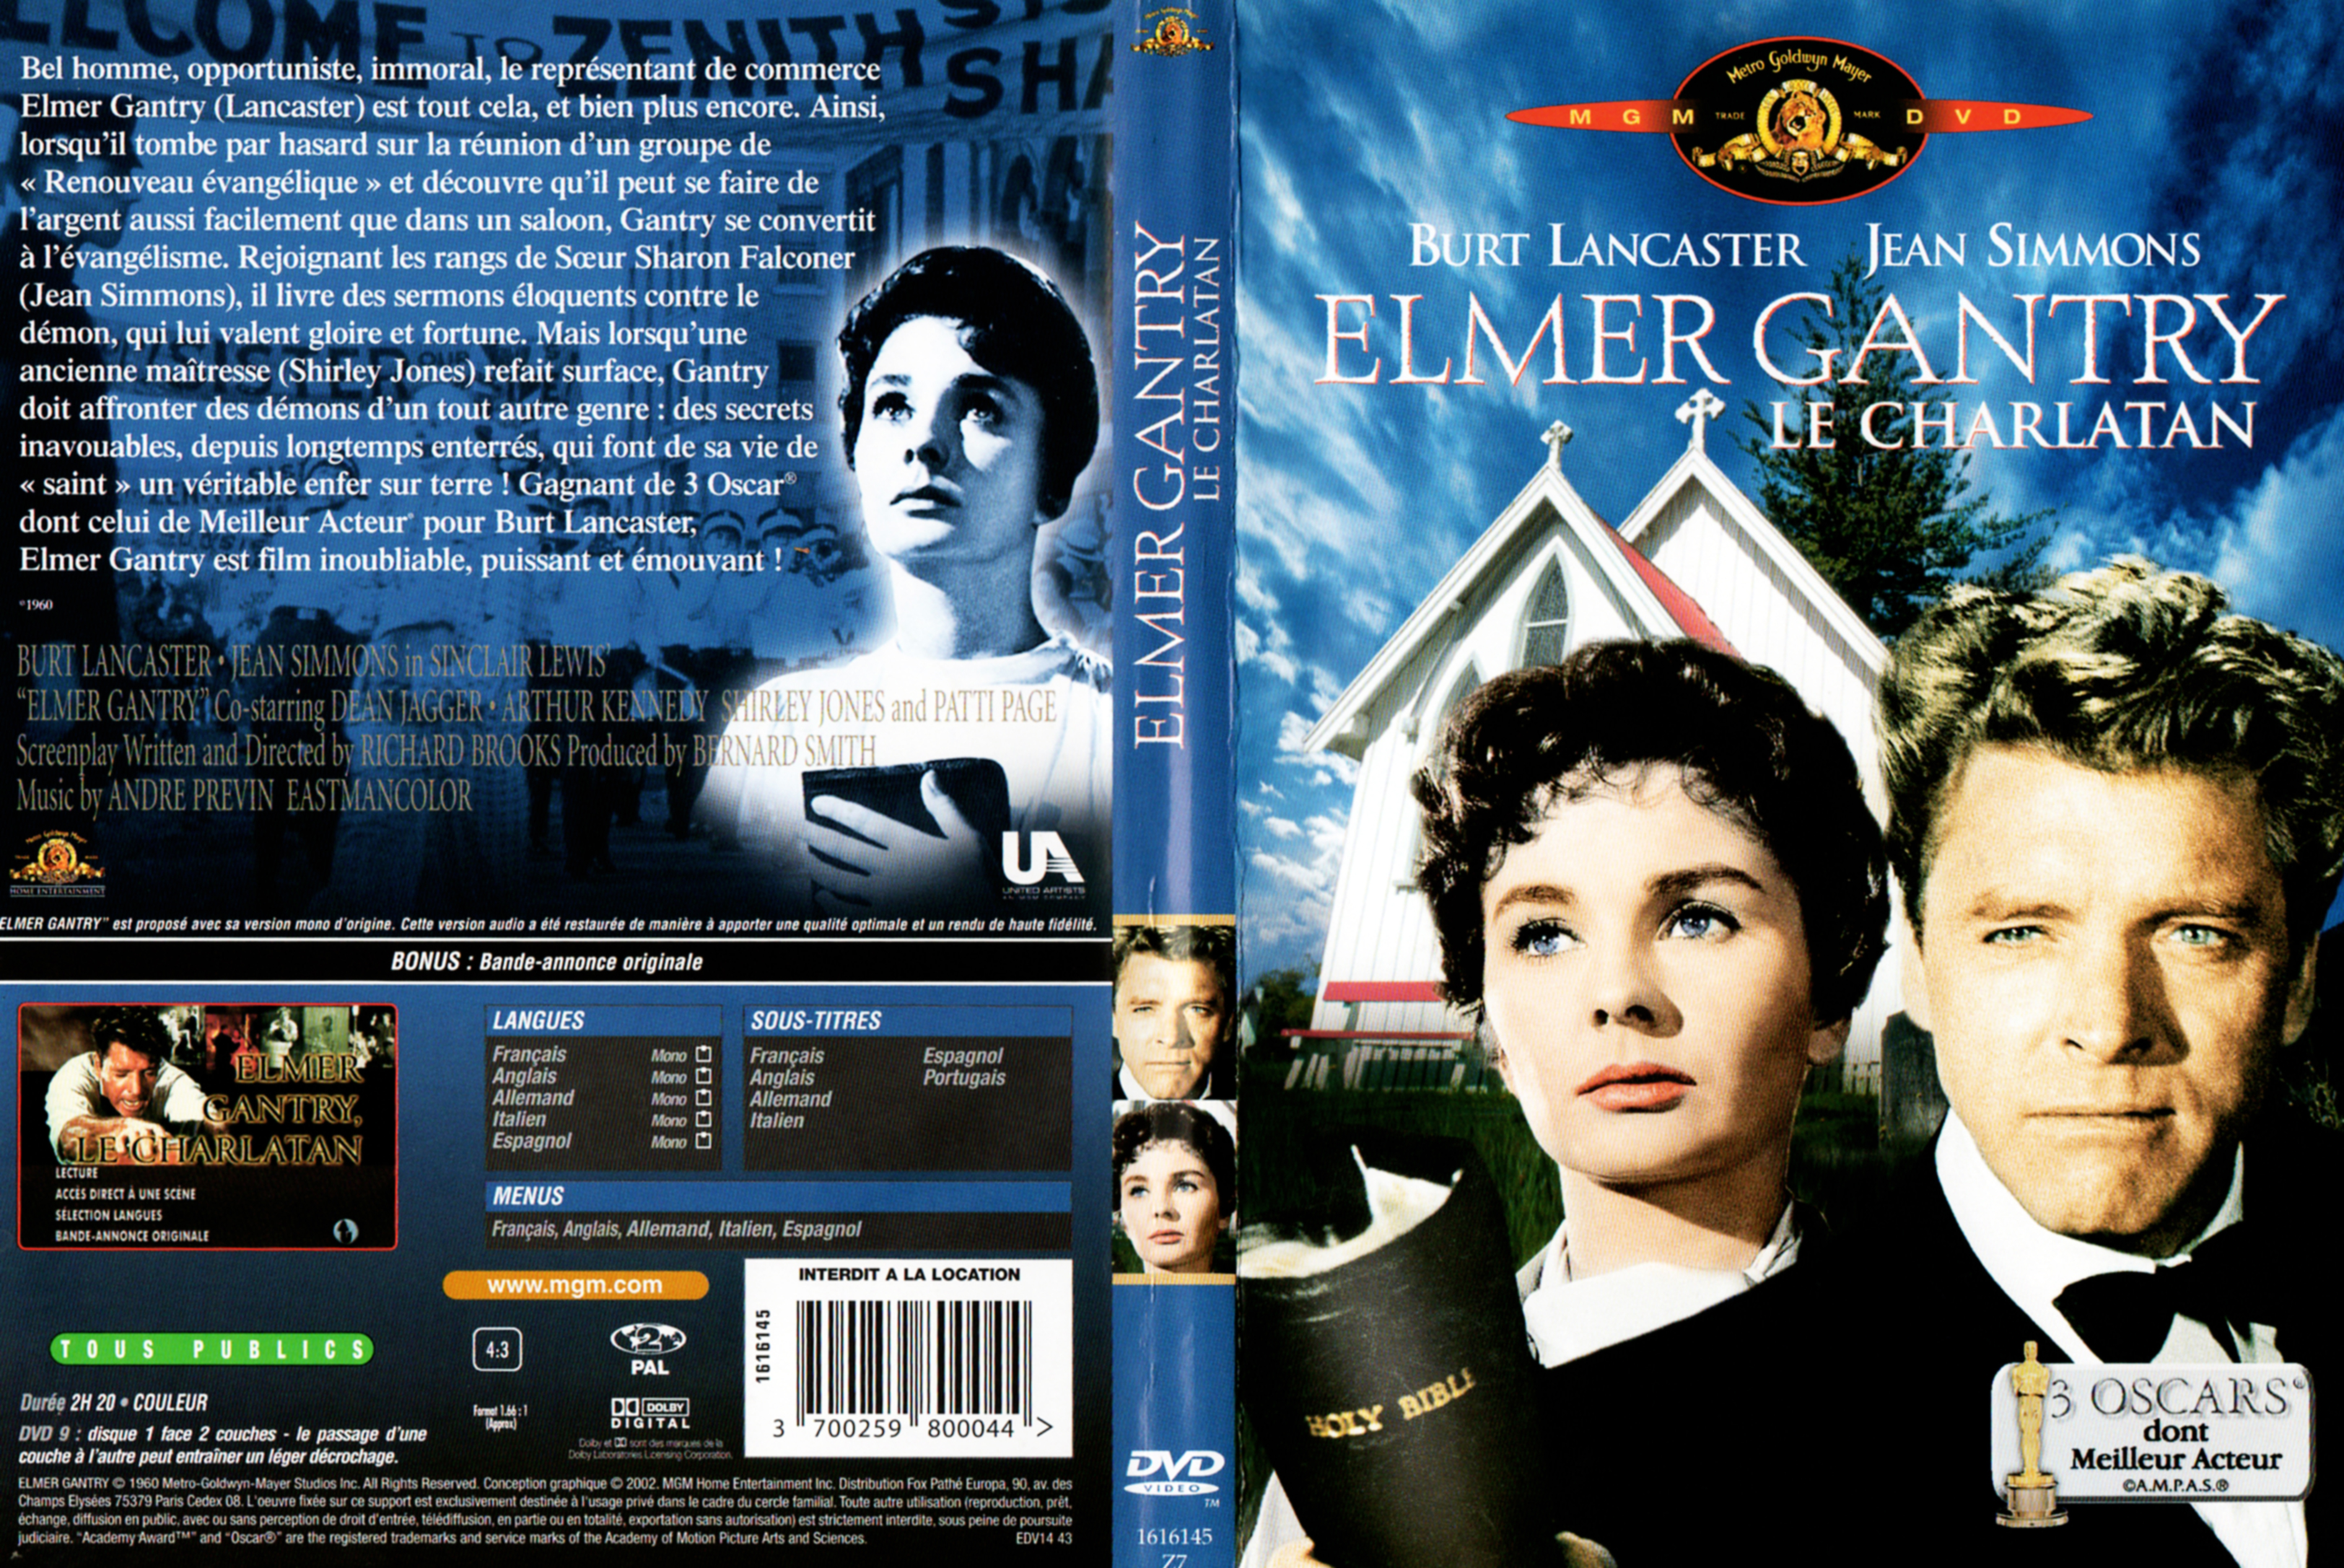 Jaquette DVD Elmer Gantry Le charlatan